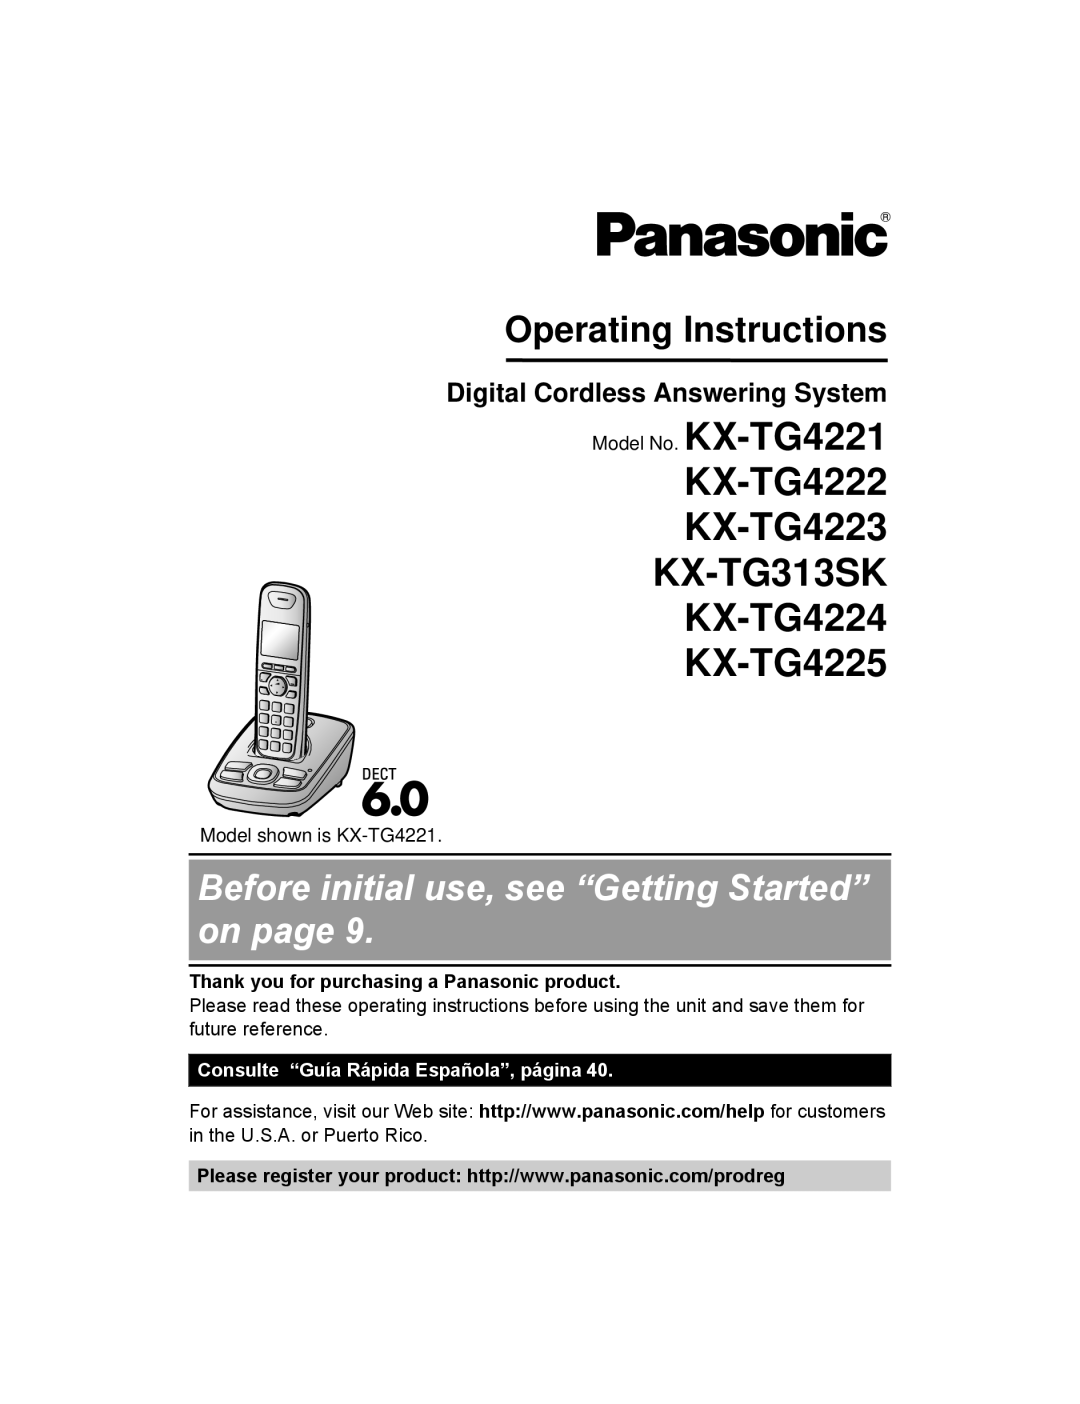 Panasonic KX-TG4224 operating instructions Digital Cordless Answering System, Model No. KX-TG4221, Operating Instructions 